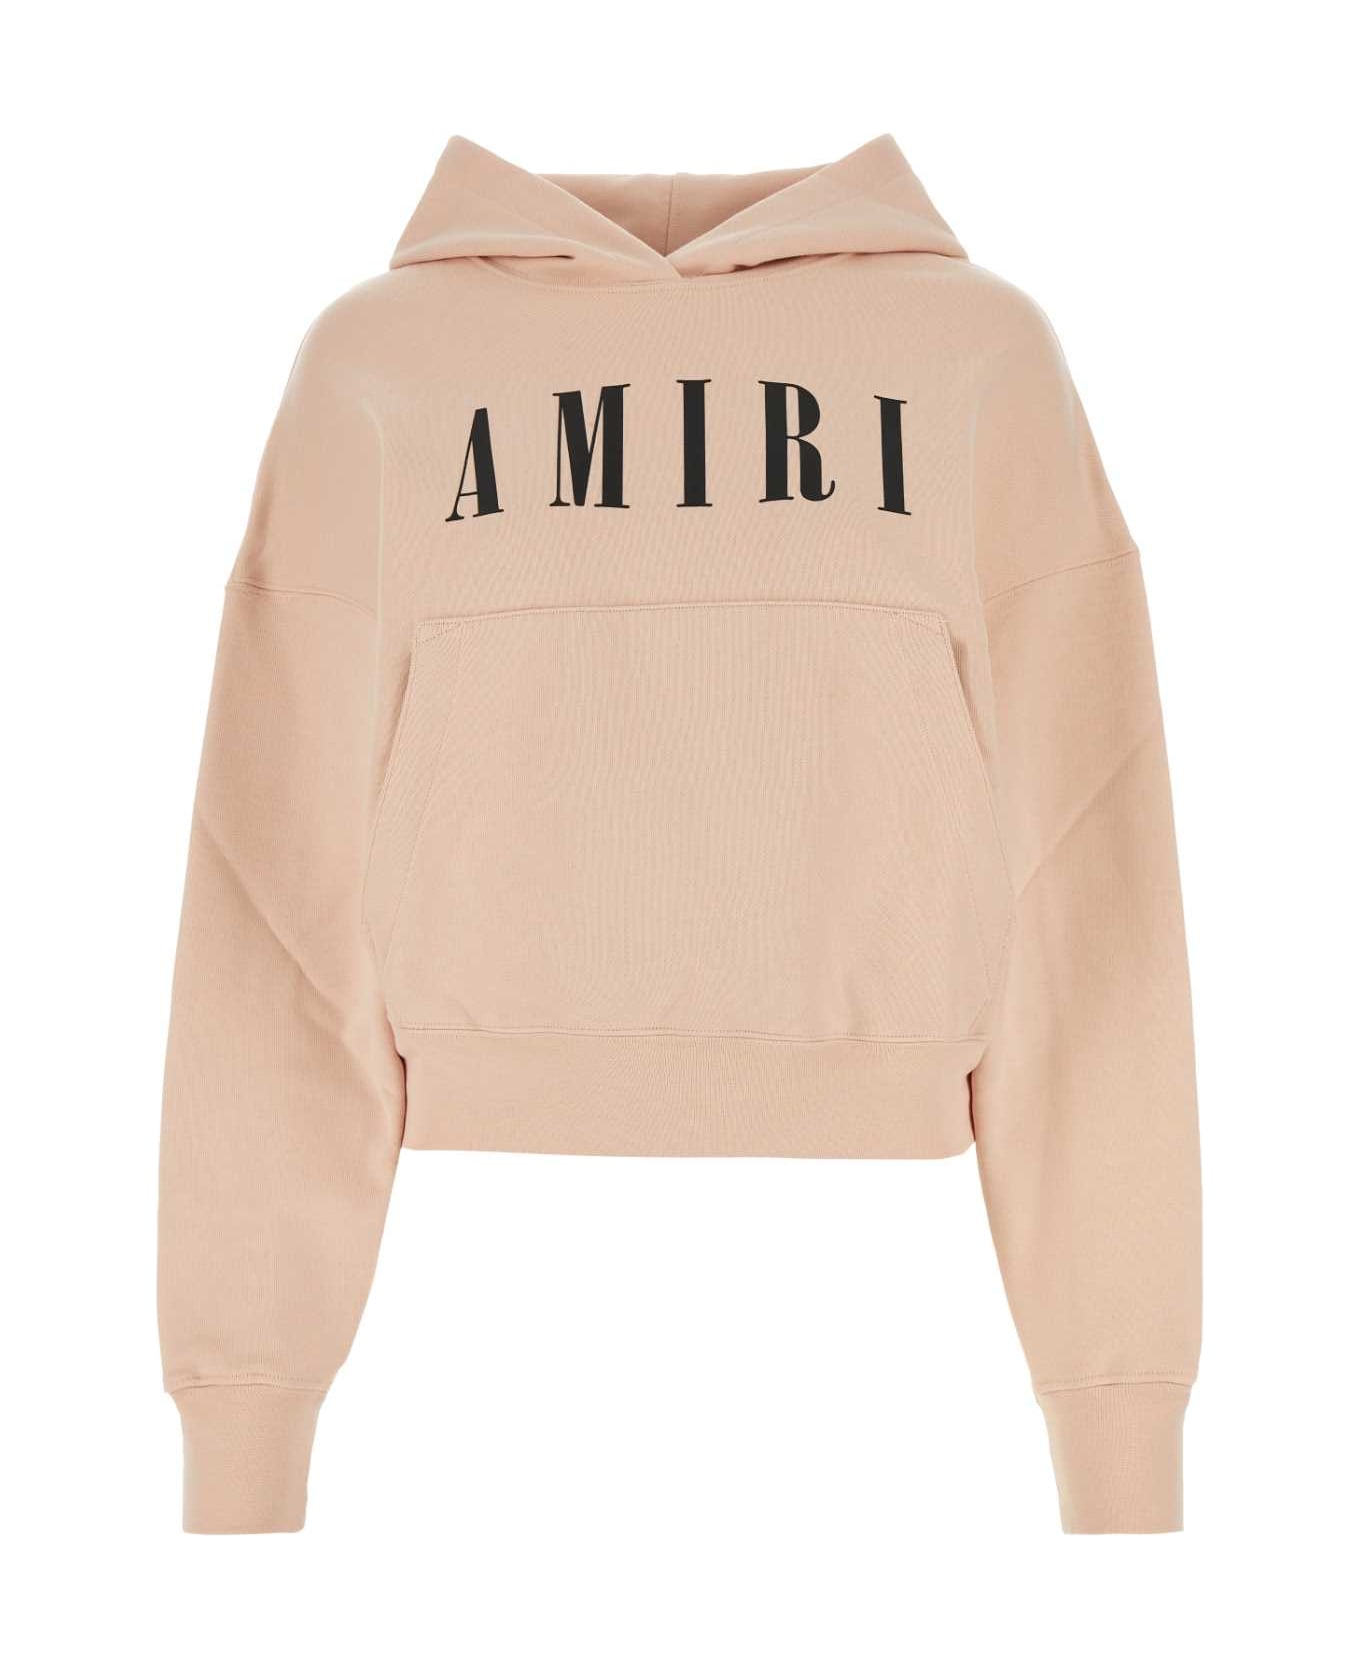 AMIRI Light Pink Cotton Sweatshirt - CREAMTAN